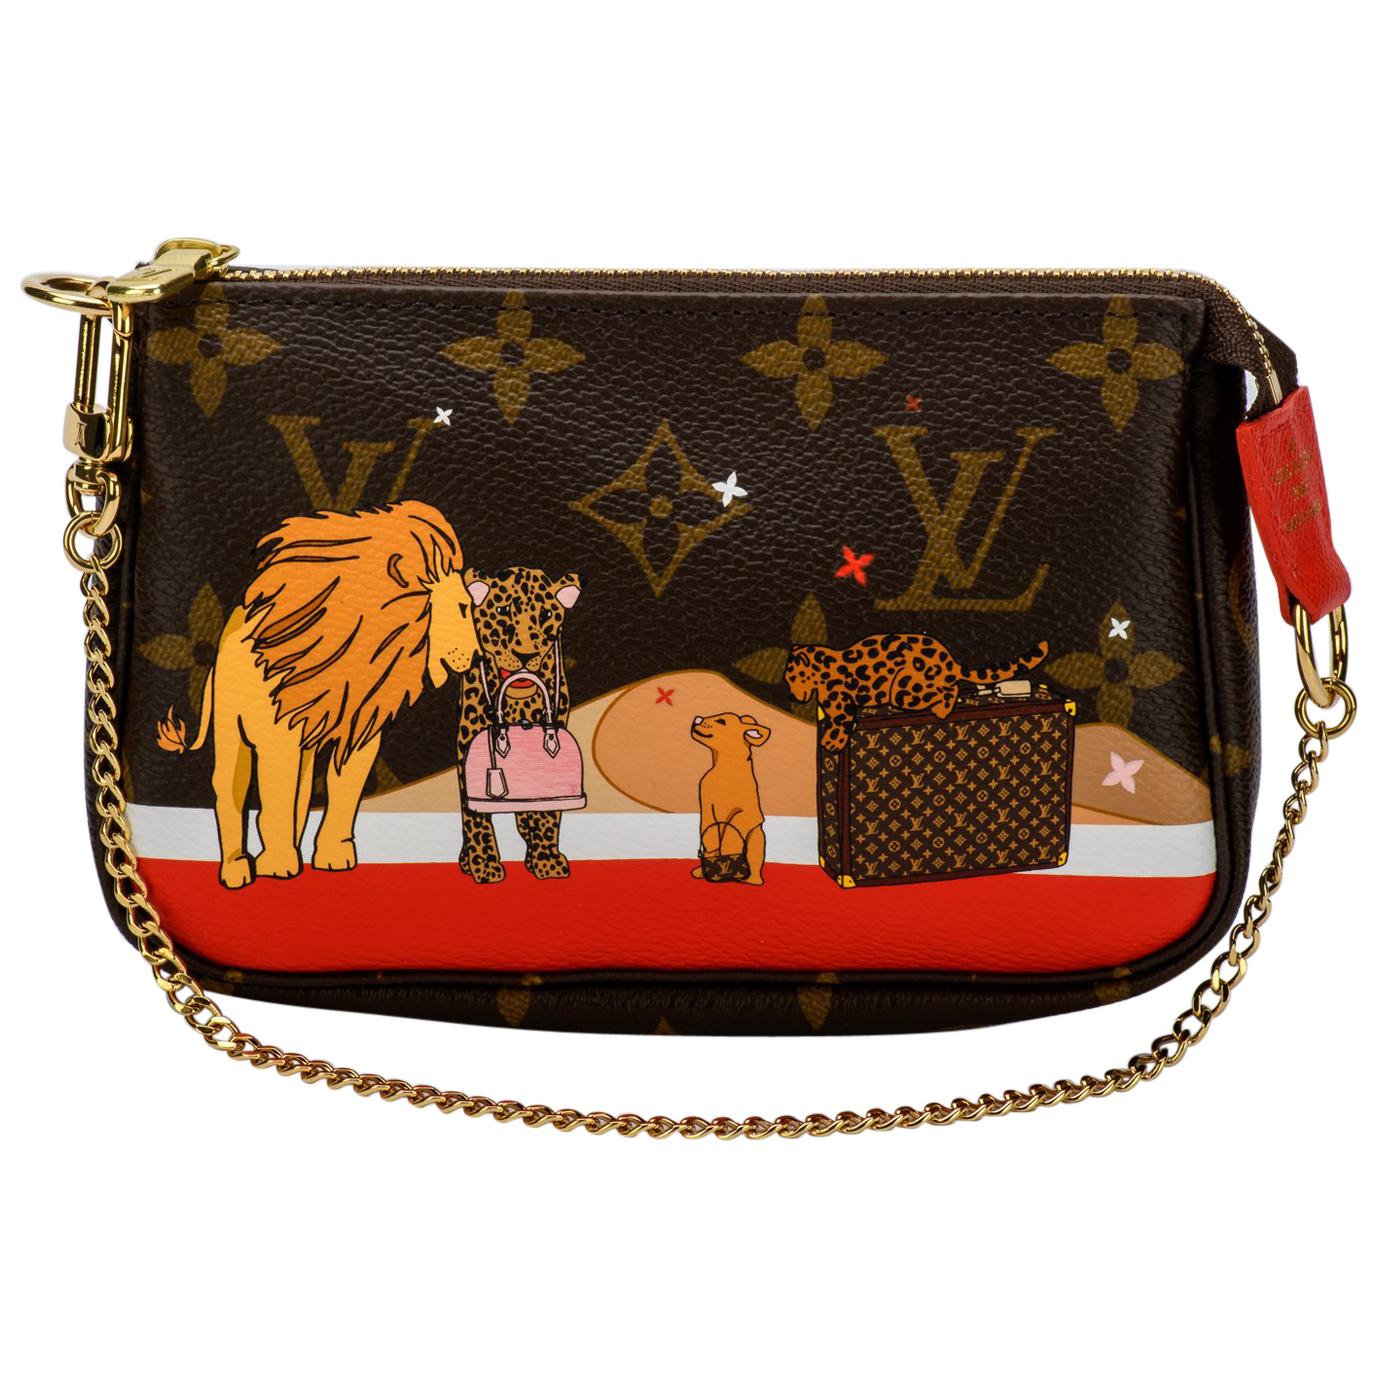 New in Box Louis Vuitton Limited Edition Lions Ghepards Pouchette Bag ...